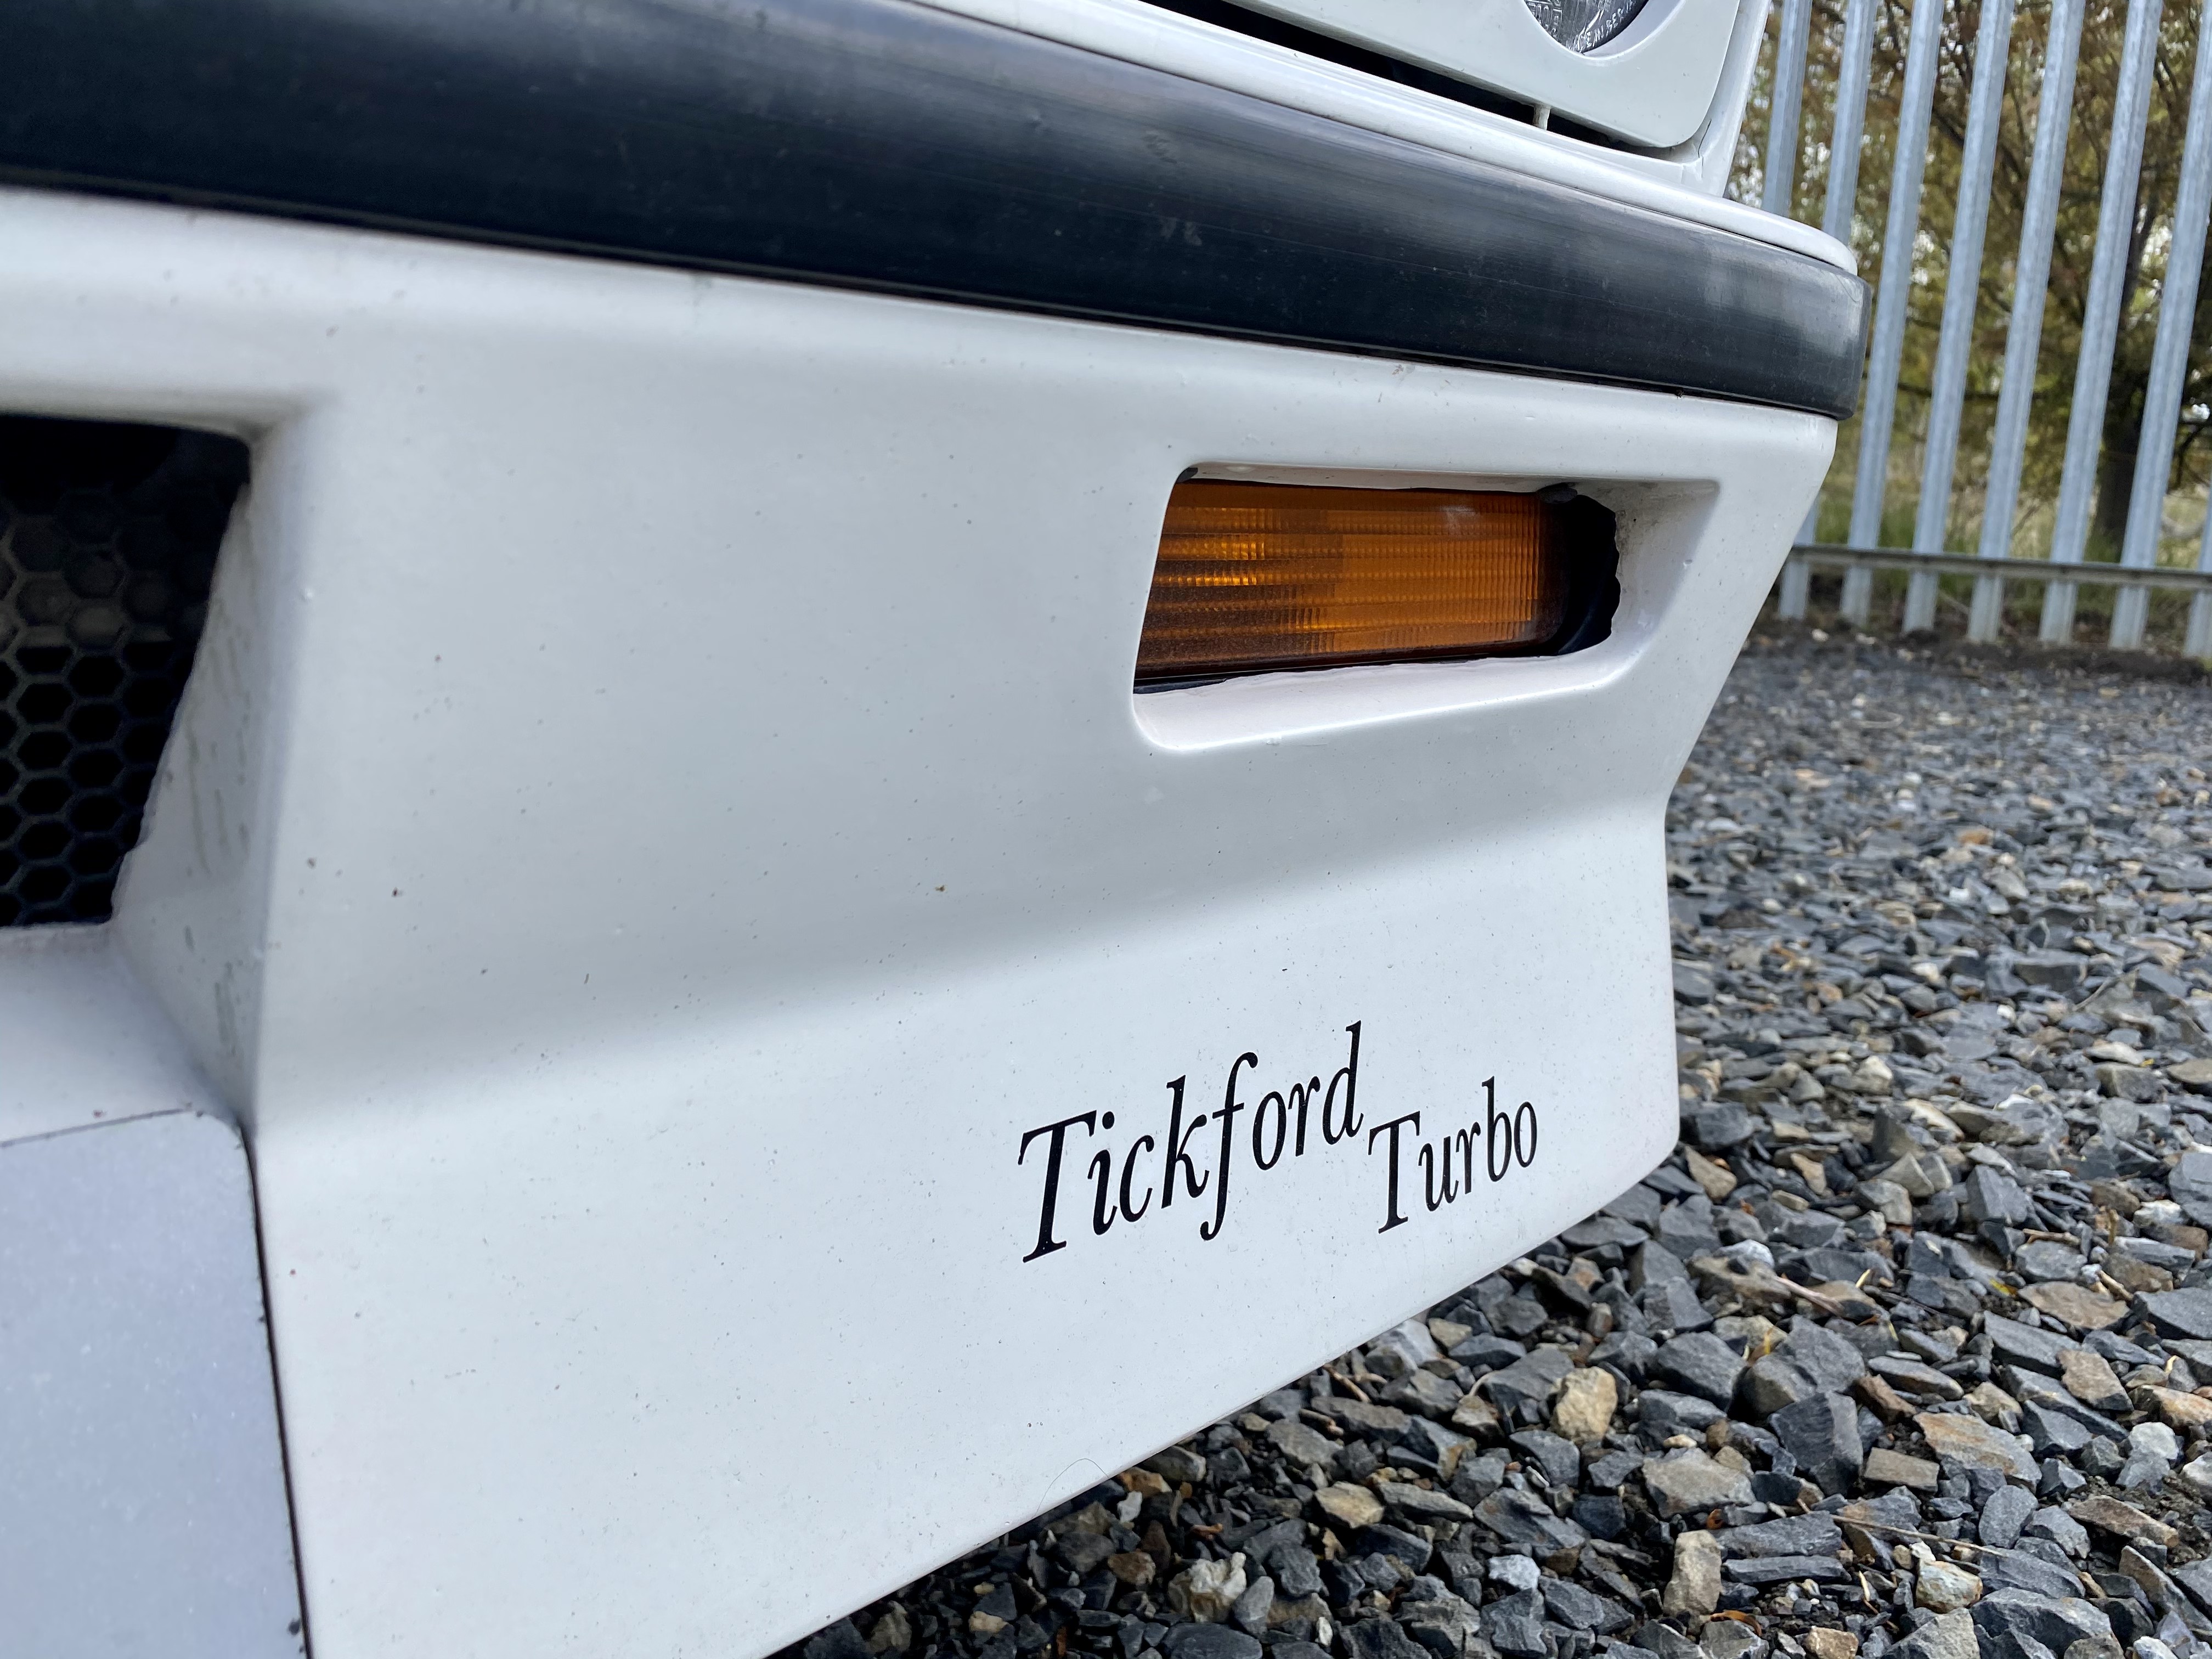 Aston Martin Tickford Turbo Capri - Image 23 of 62